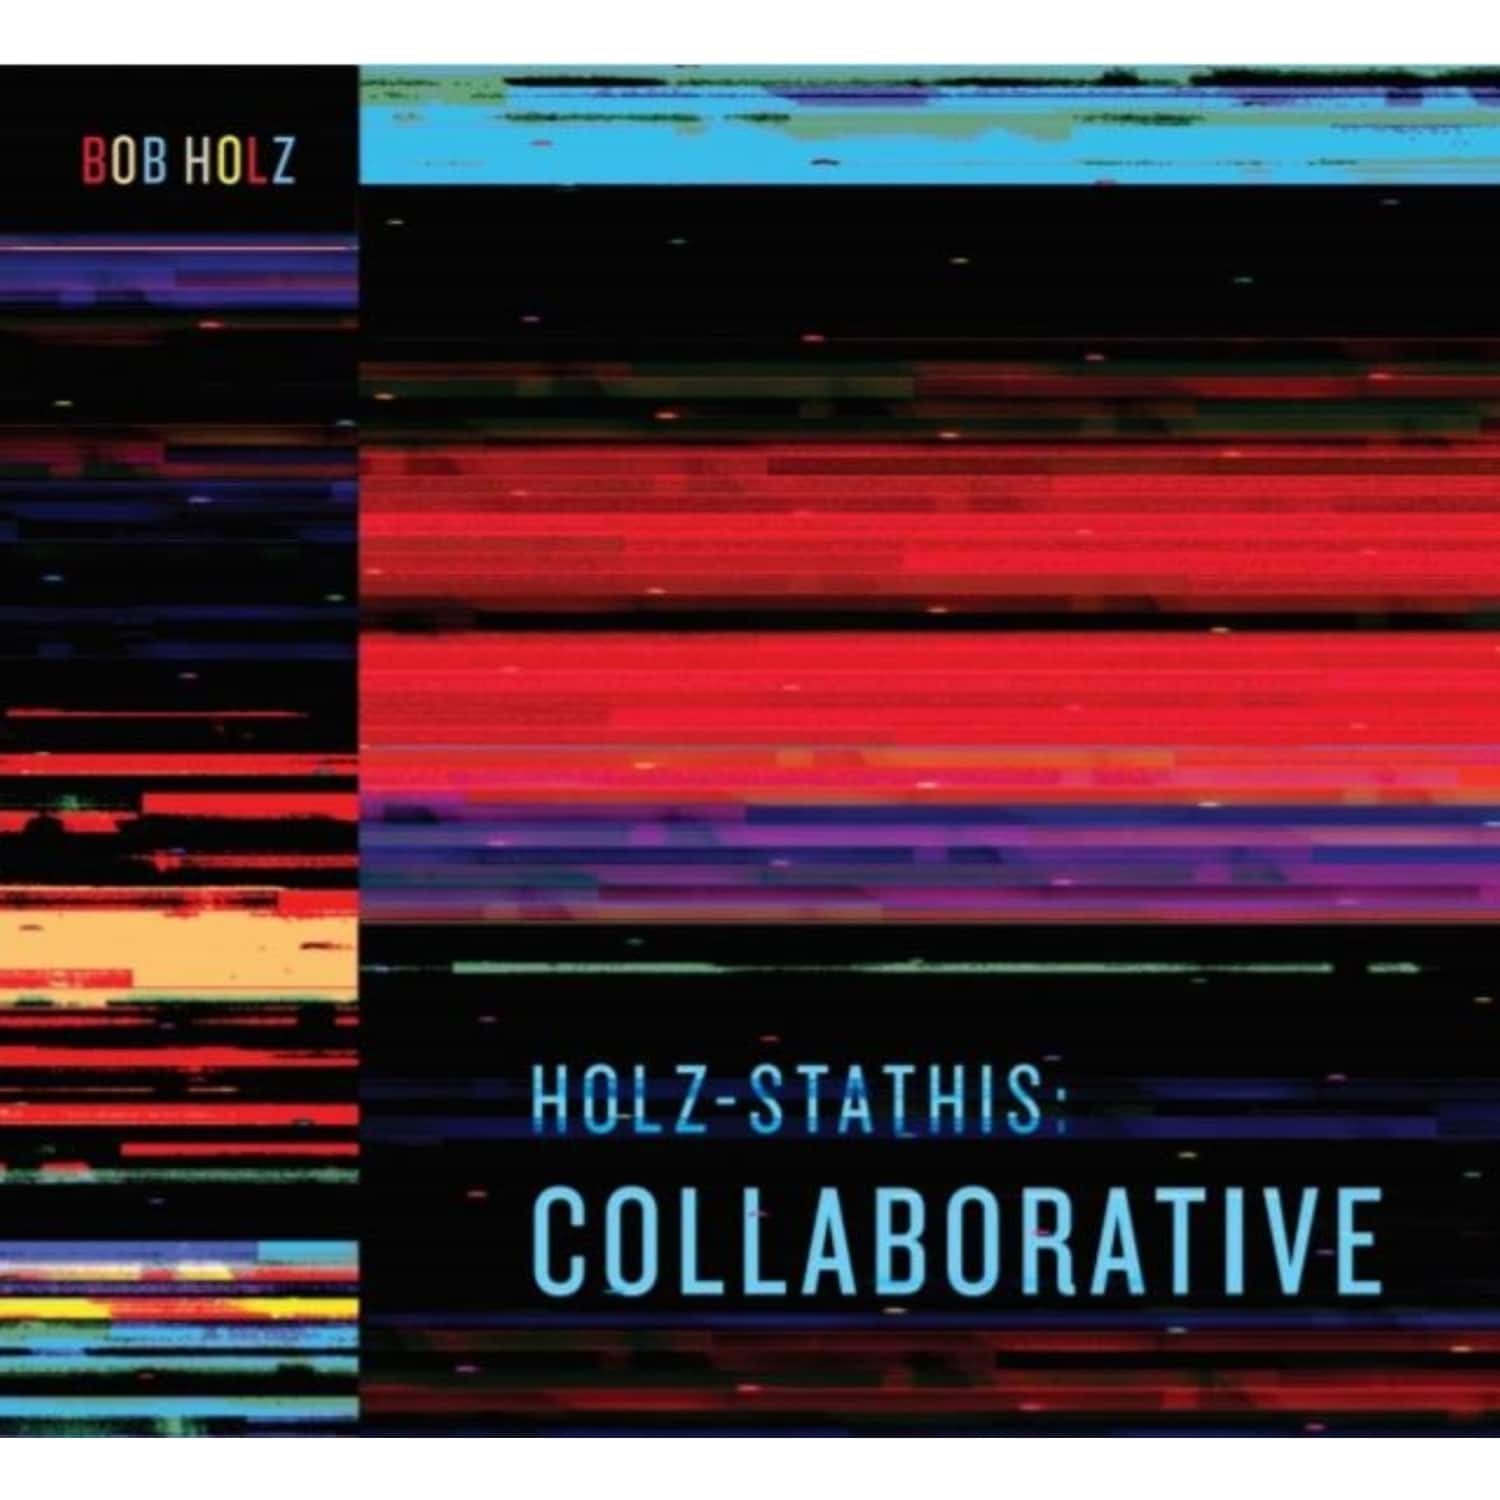 Bob Holz - HOLZ-STATHIS: COLLABORATIVE 